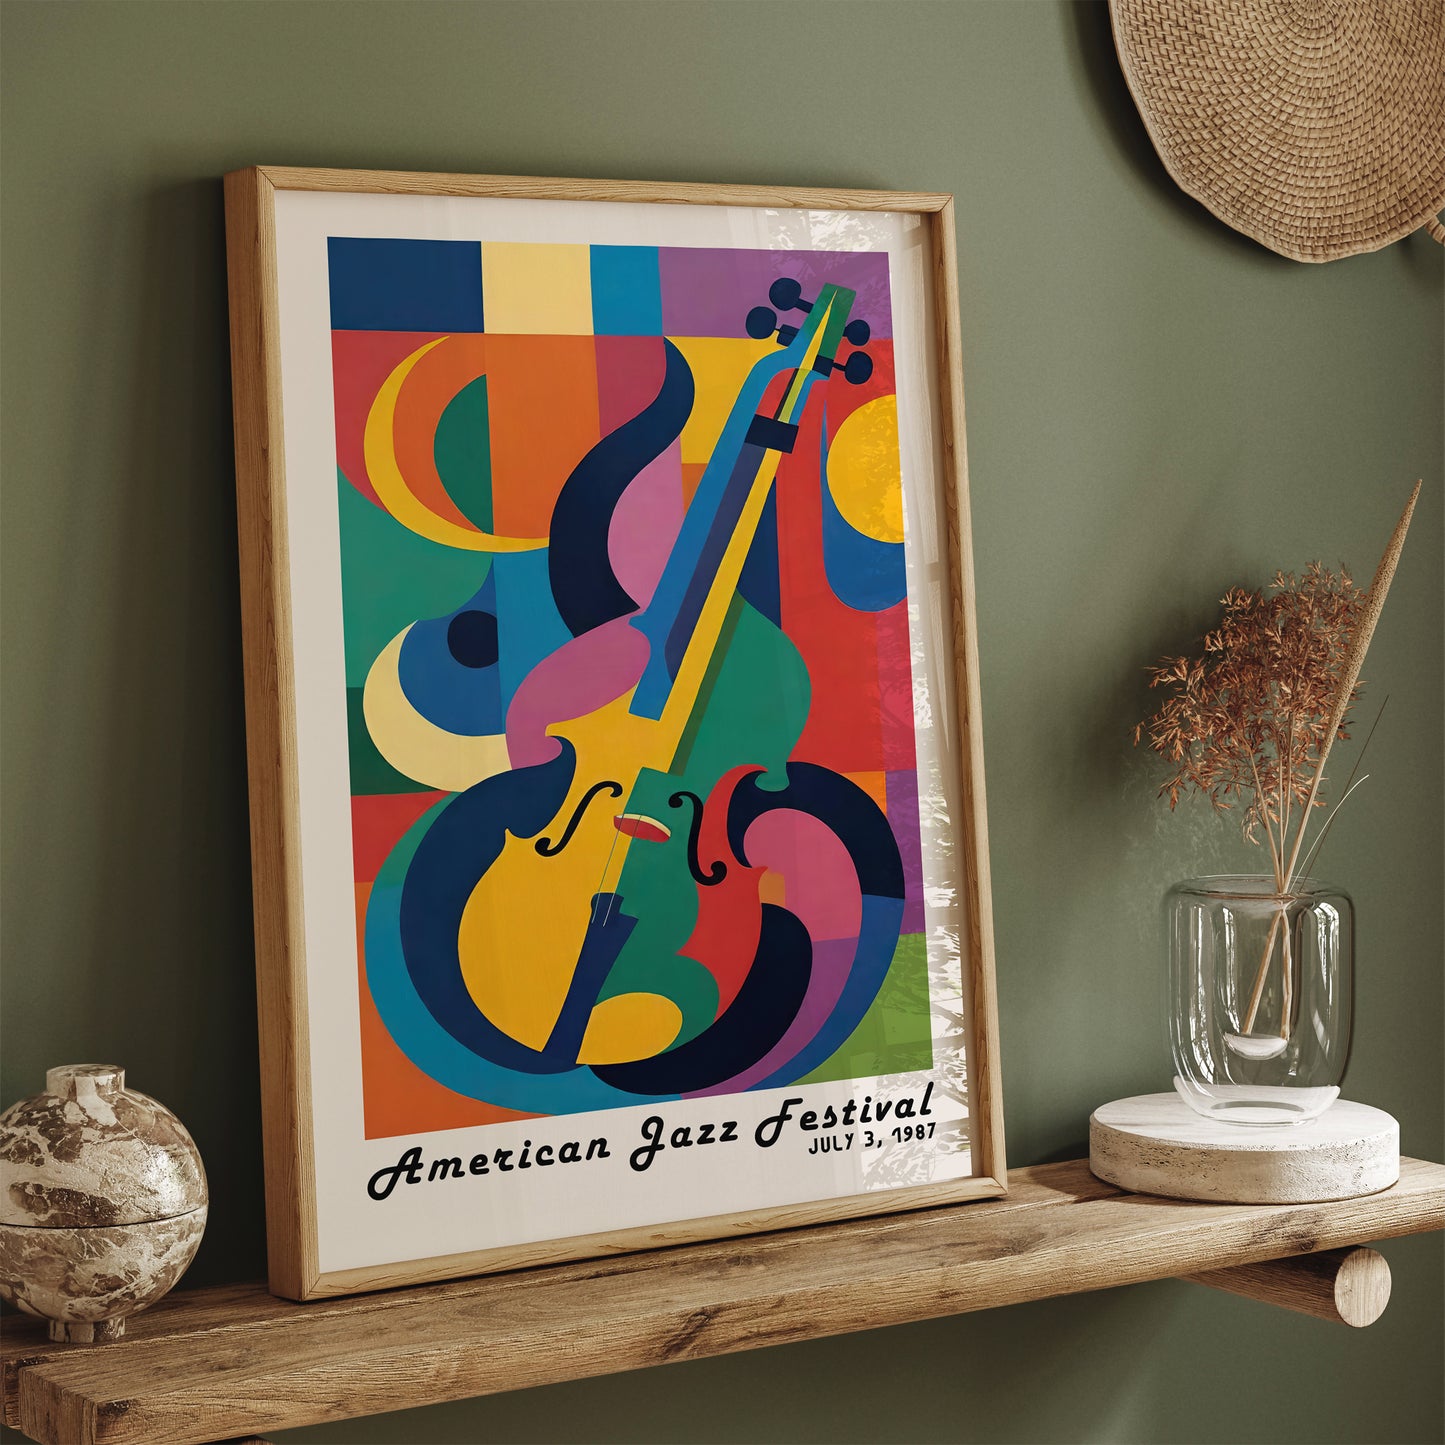 American Jazz Festival Poster